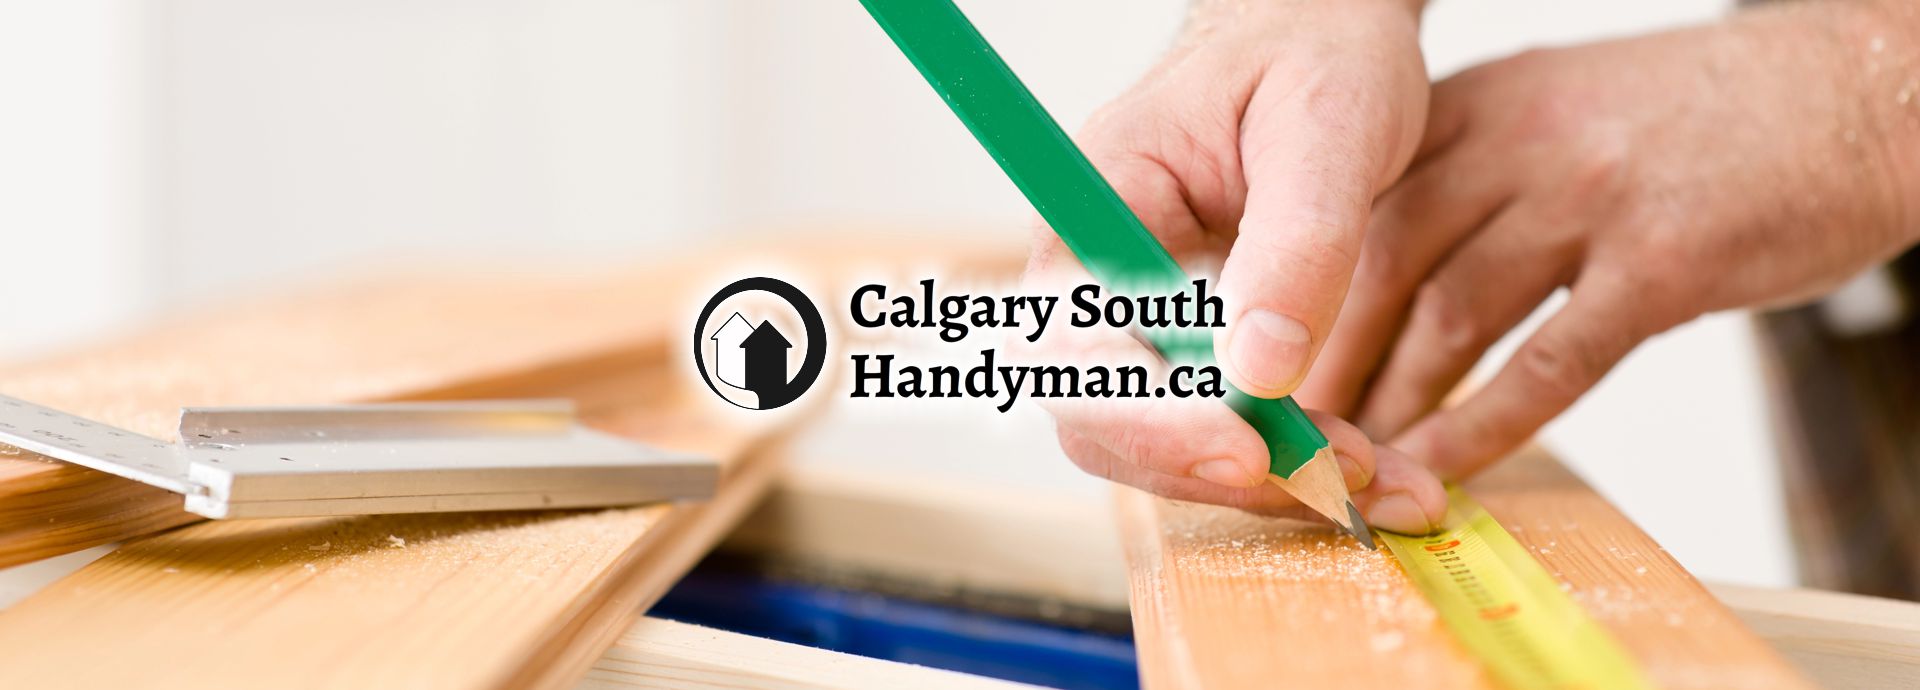 Handyman South Calgary